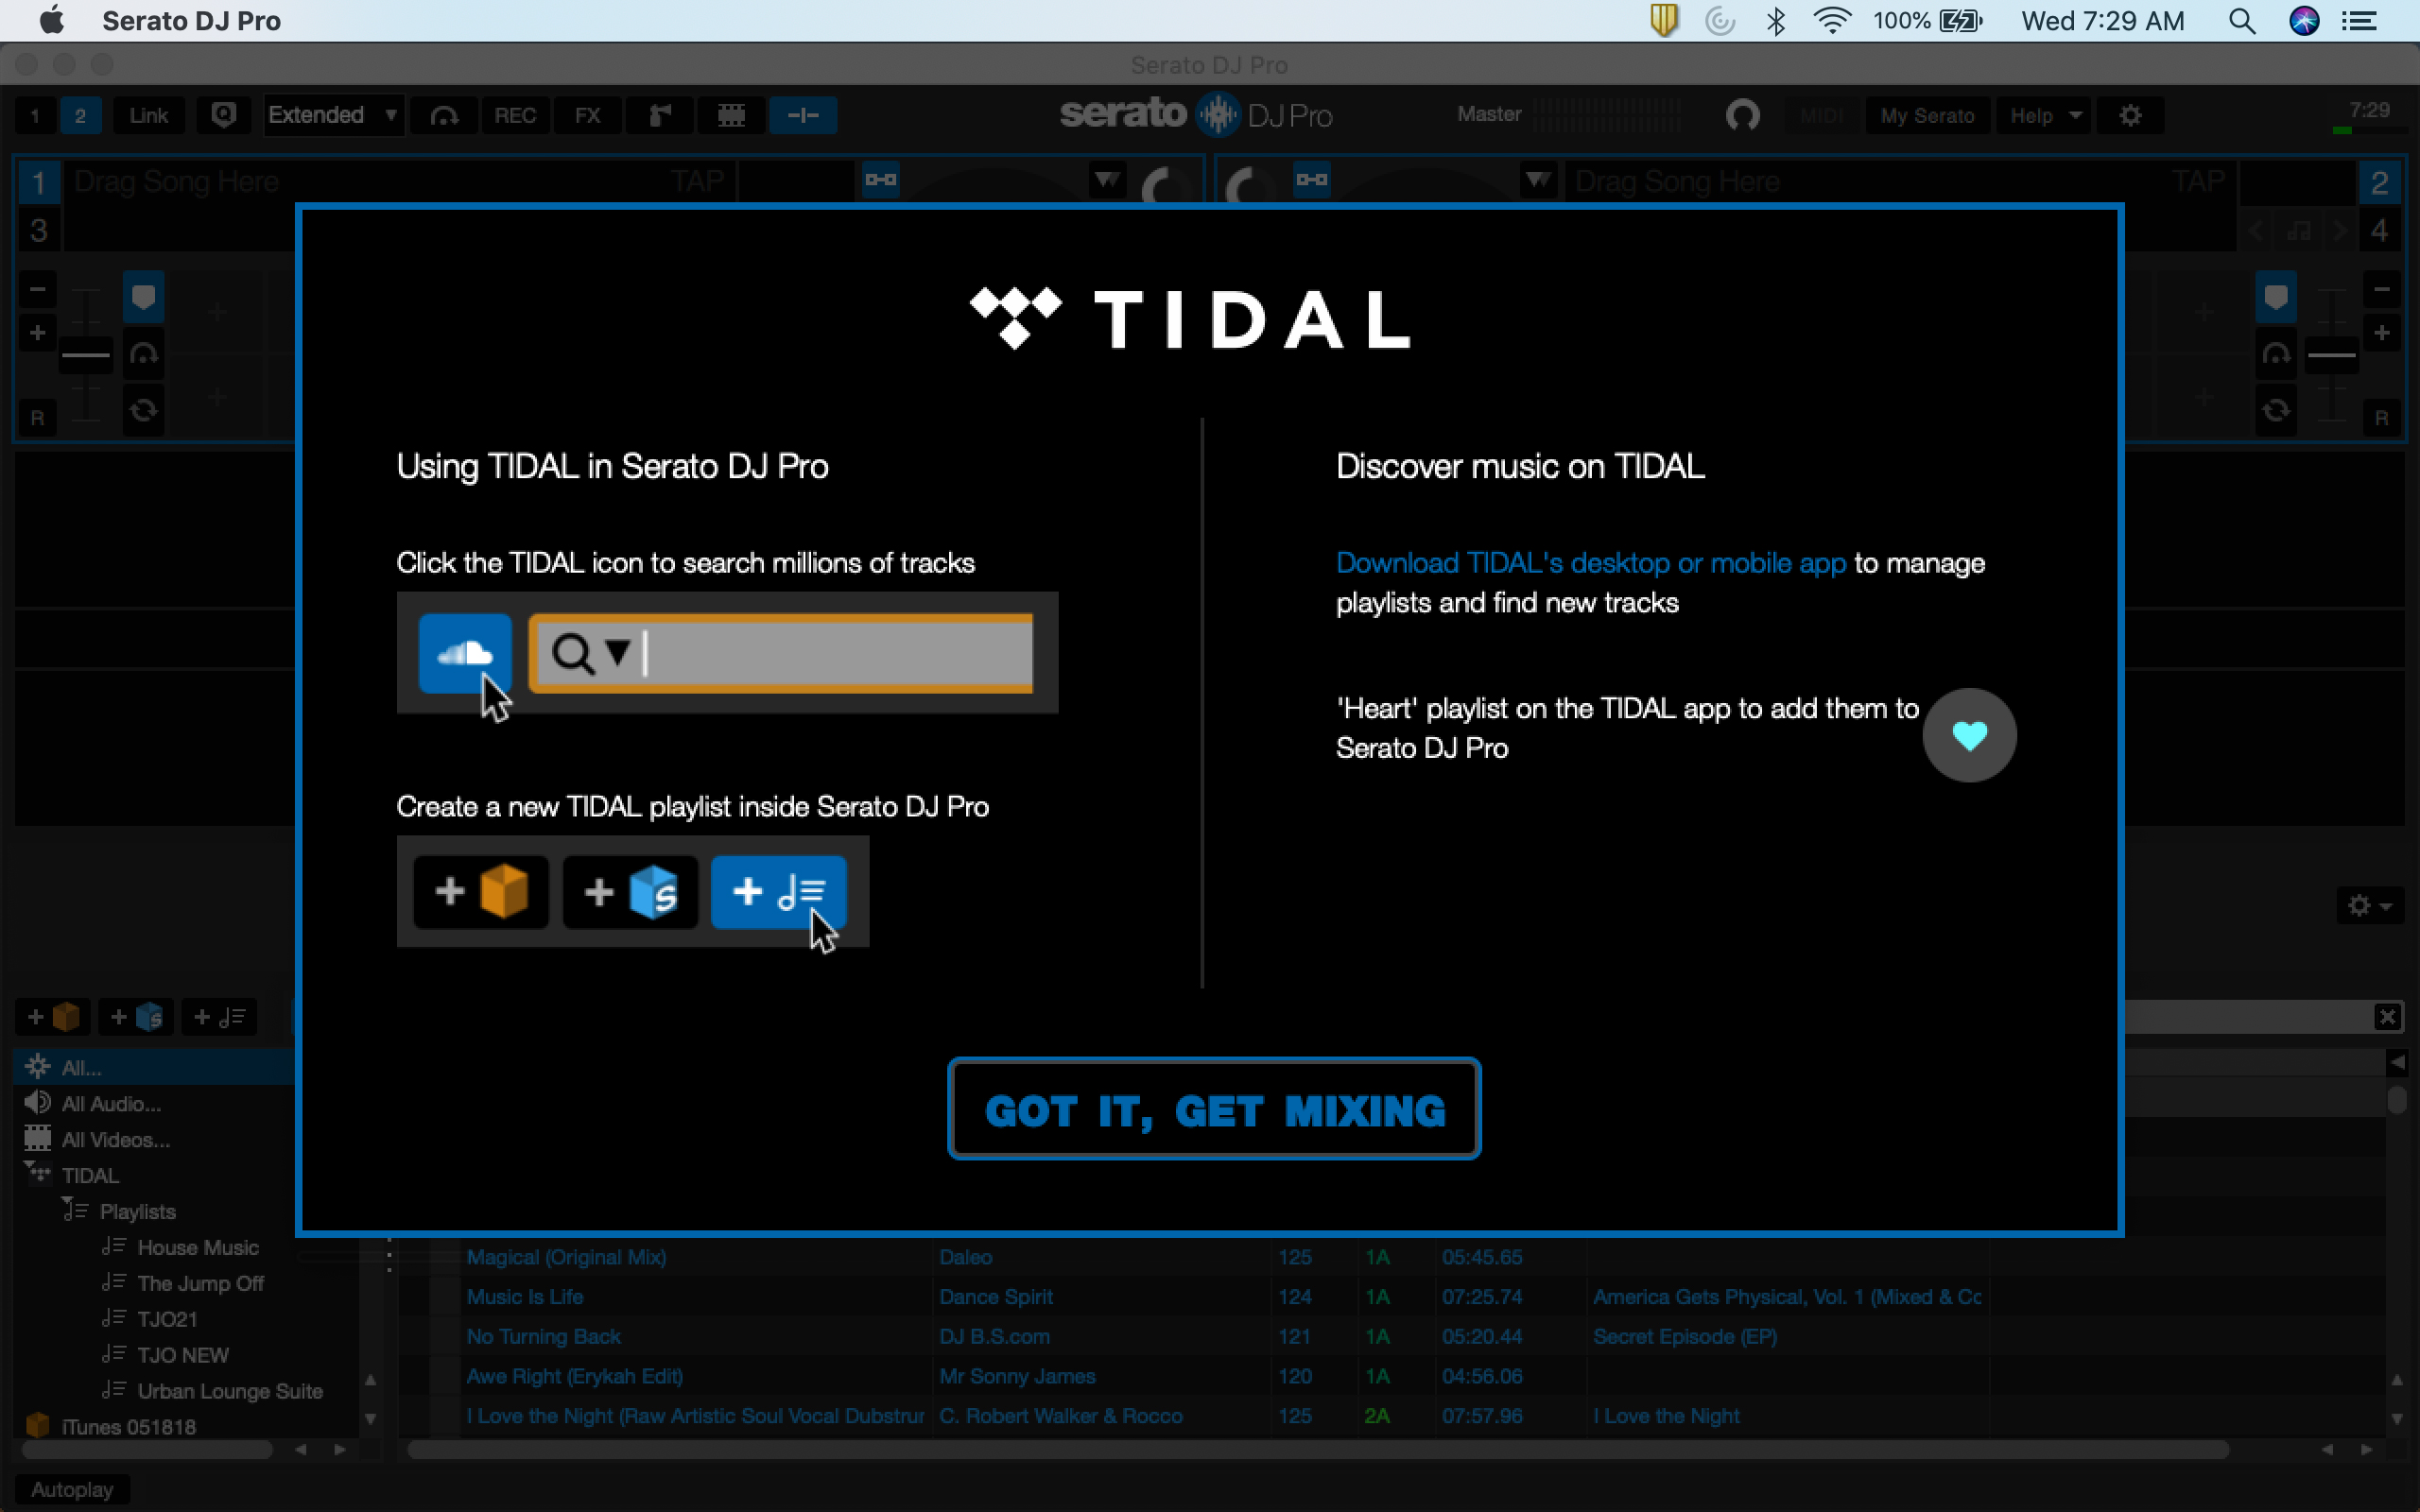 tidal desktop app for mac server error